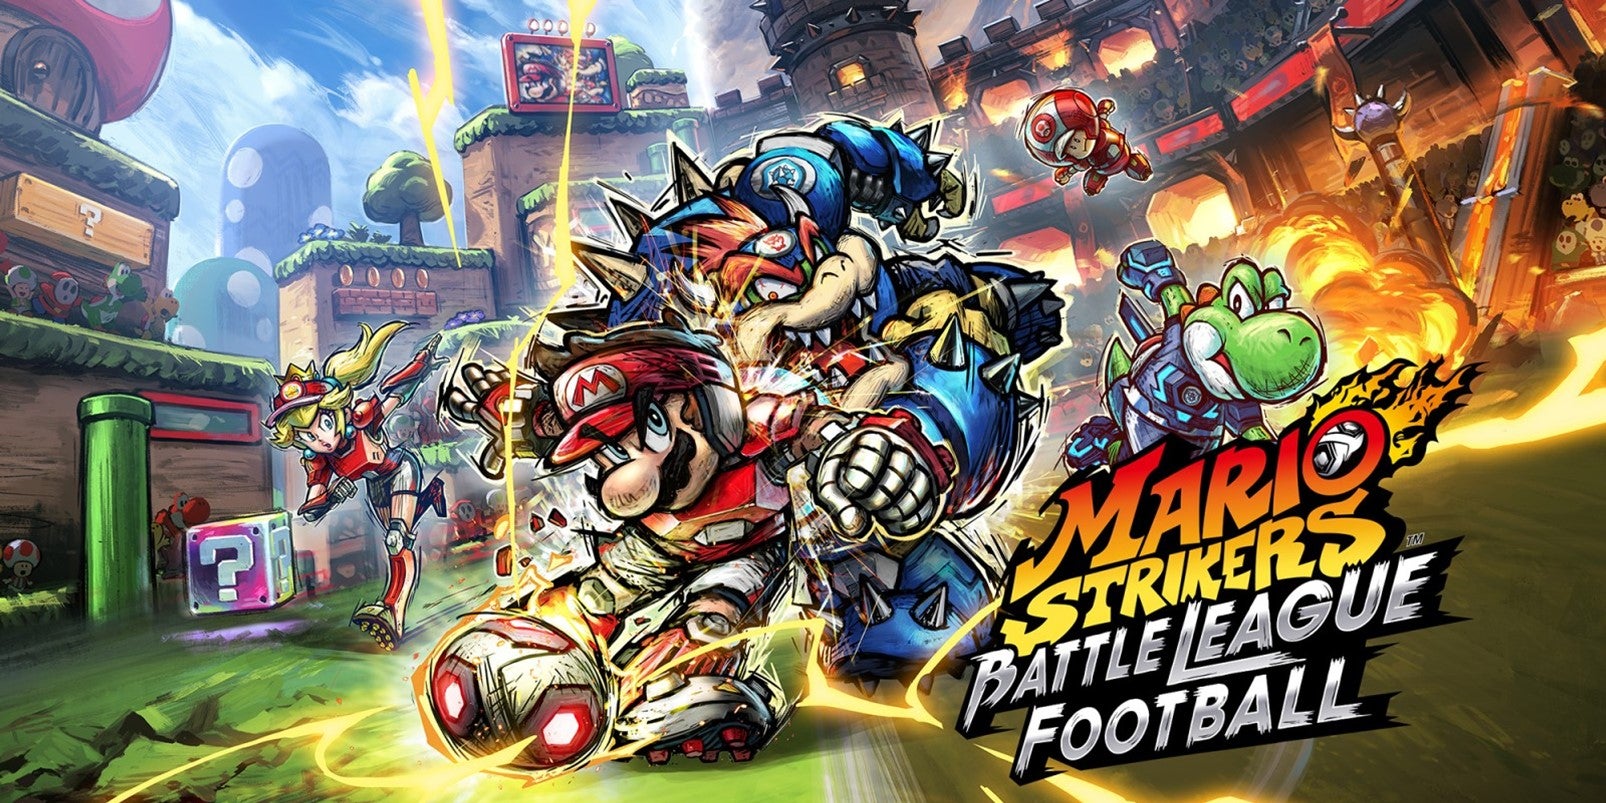 Obrazki dla Mario Strikers Battle League Football - poradnik na start